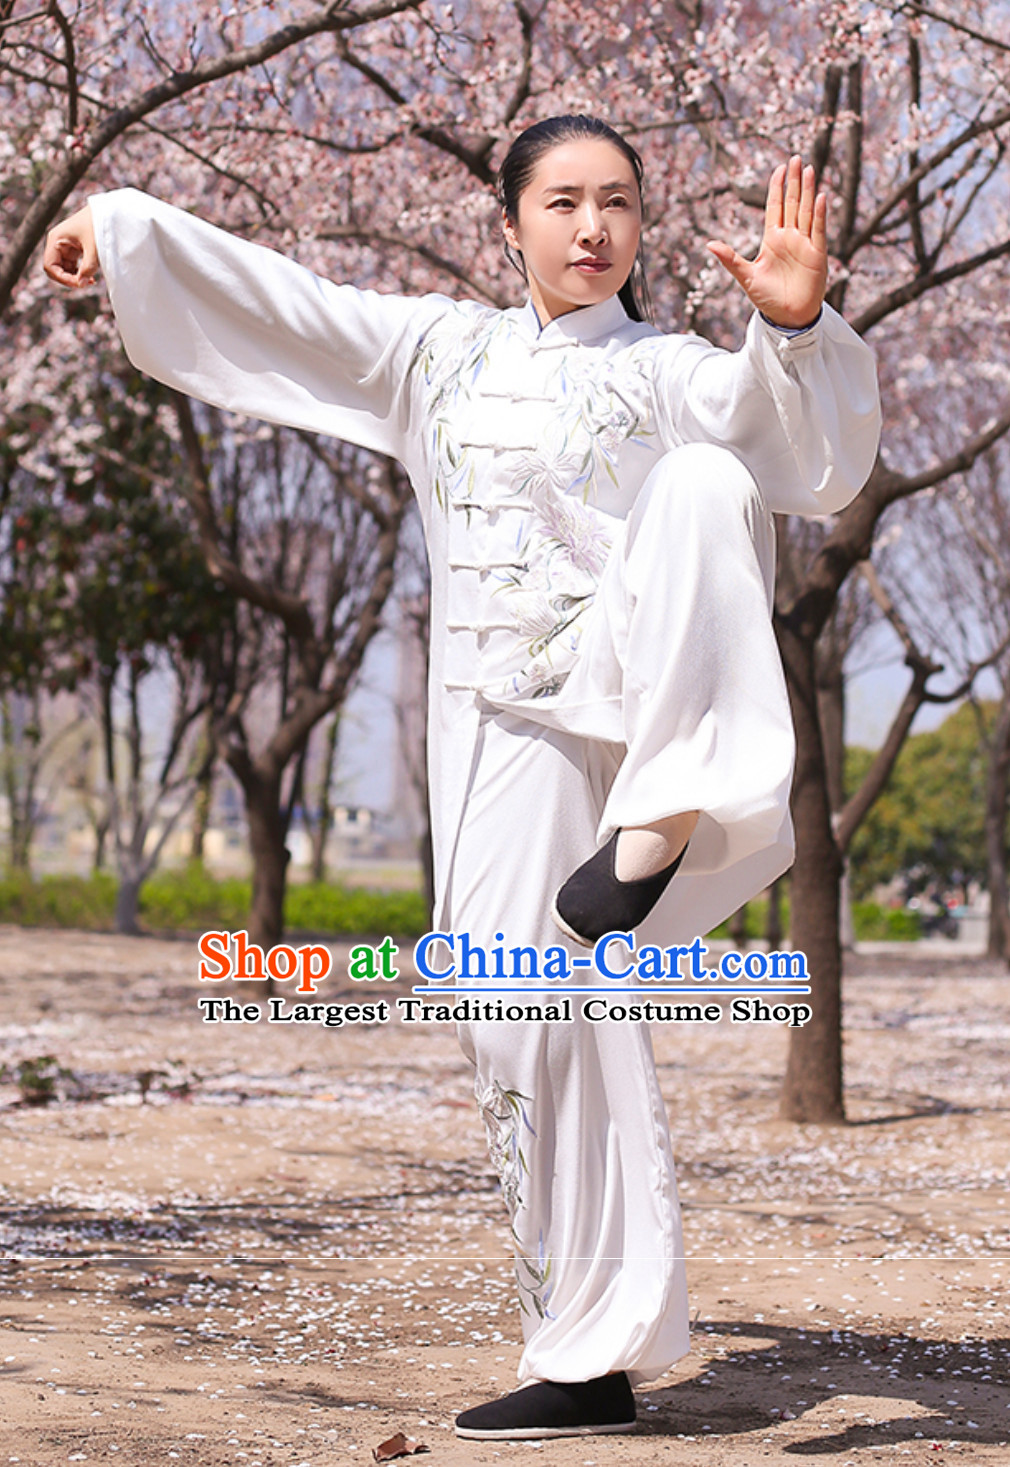 Top Chinese Traditional Competition Championship Tai Chi Taiji Kung Fu Wing Chun Kungfu Tai Ji Gong Fu Master Suit Clothes Complete Set